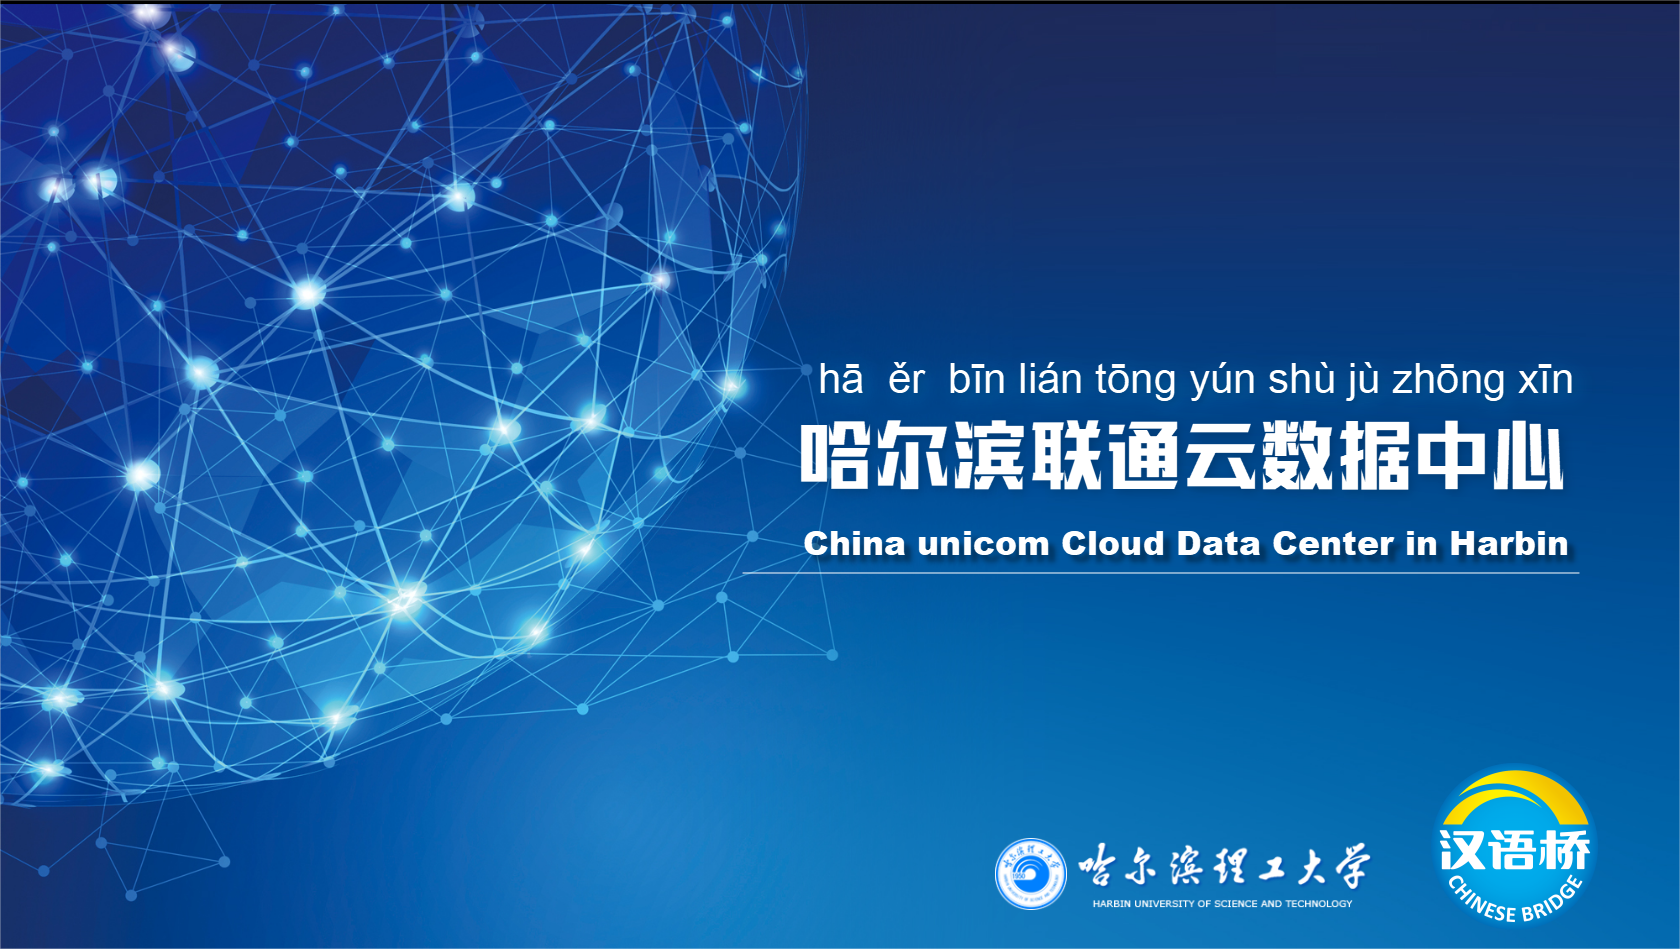 China unicom coud Data center in harbin